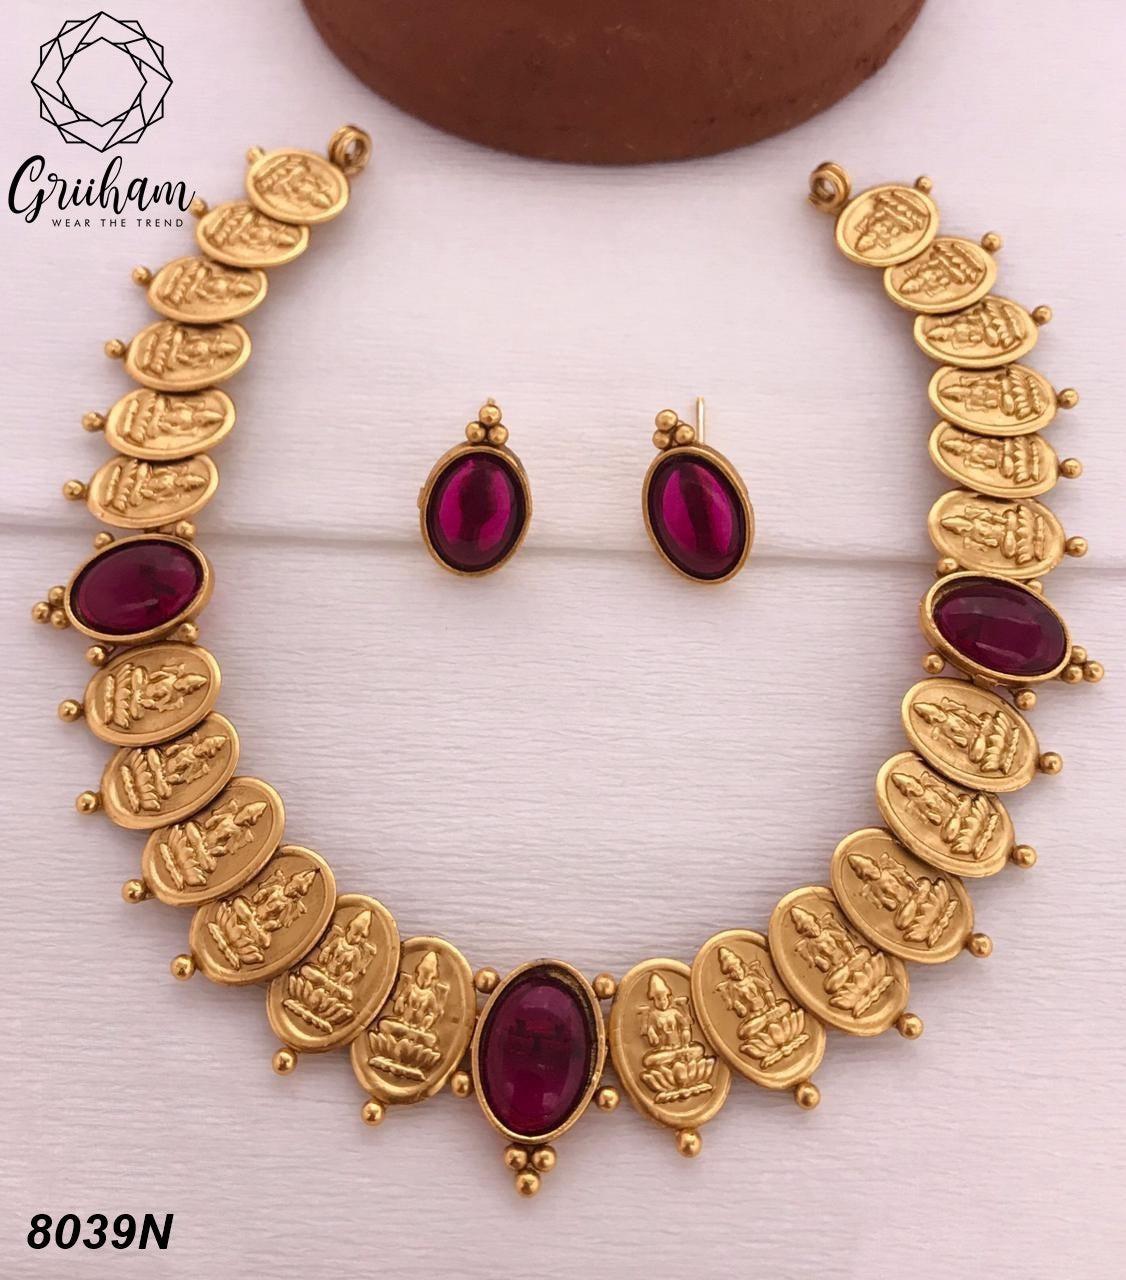 Premium Gold plated Floral Design Necklace set 8039N-Necklace Set-Kanakam-Ruby Red-Griiham